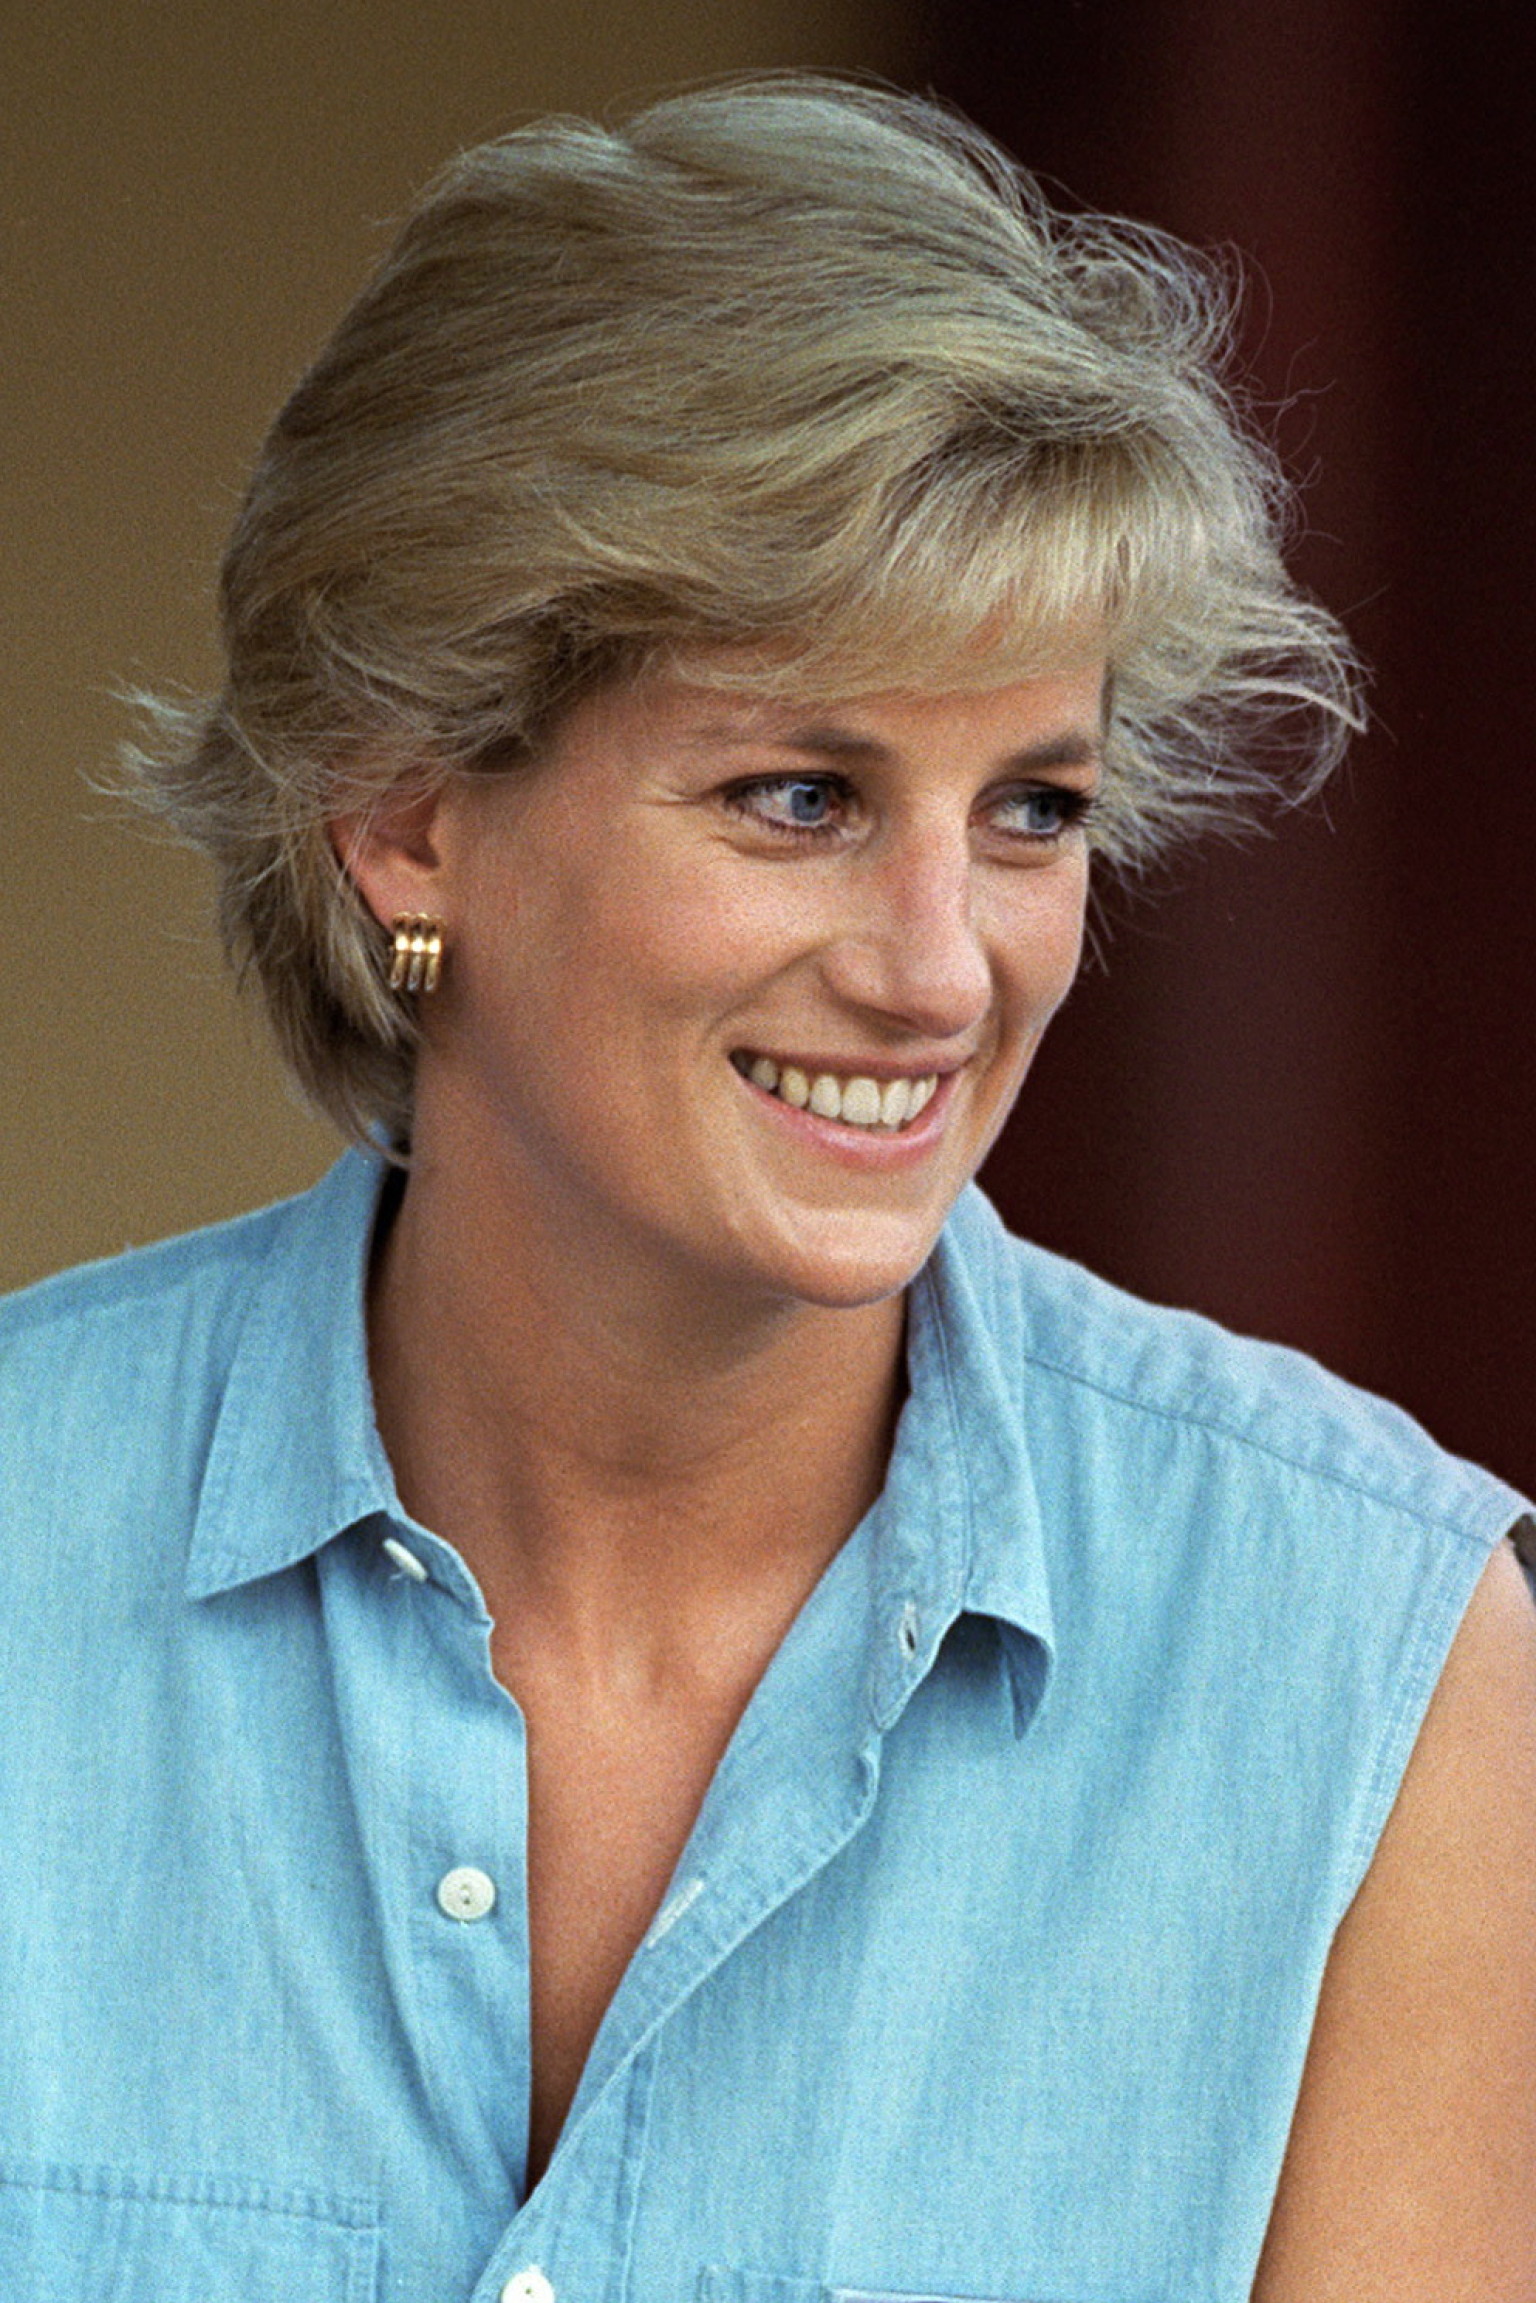 est100 一些攝影(some photos): Princess Diana, 黛安娜王妃